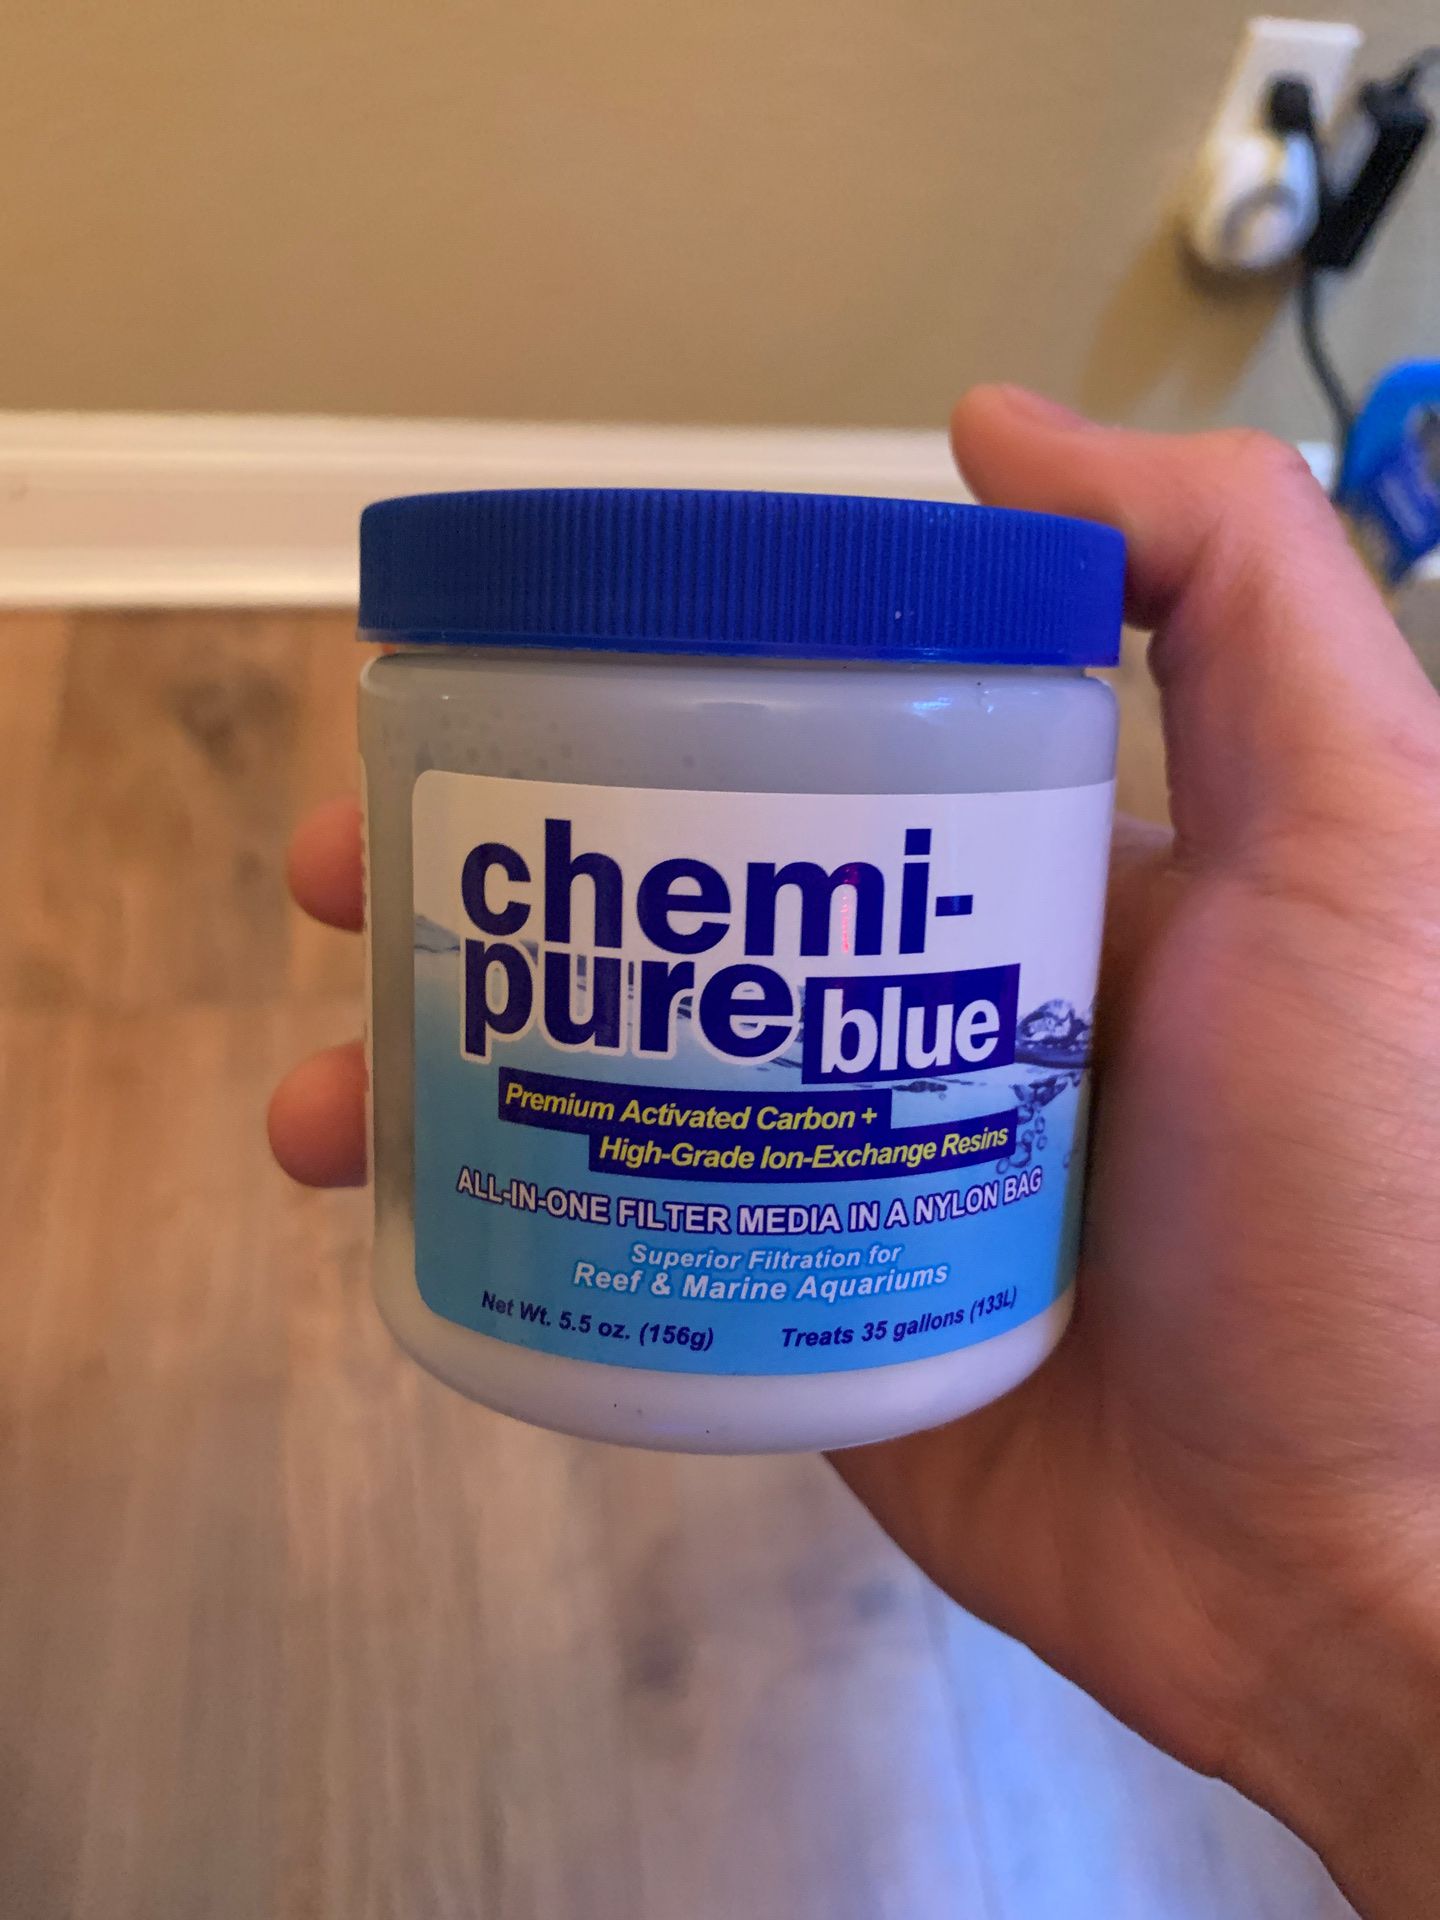 Chemi pure blue (BRAND NEW)